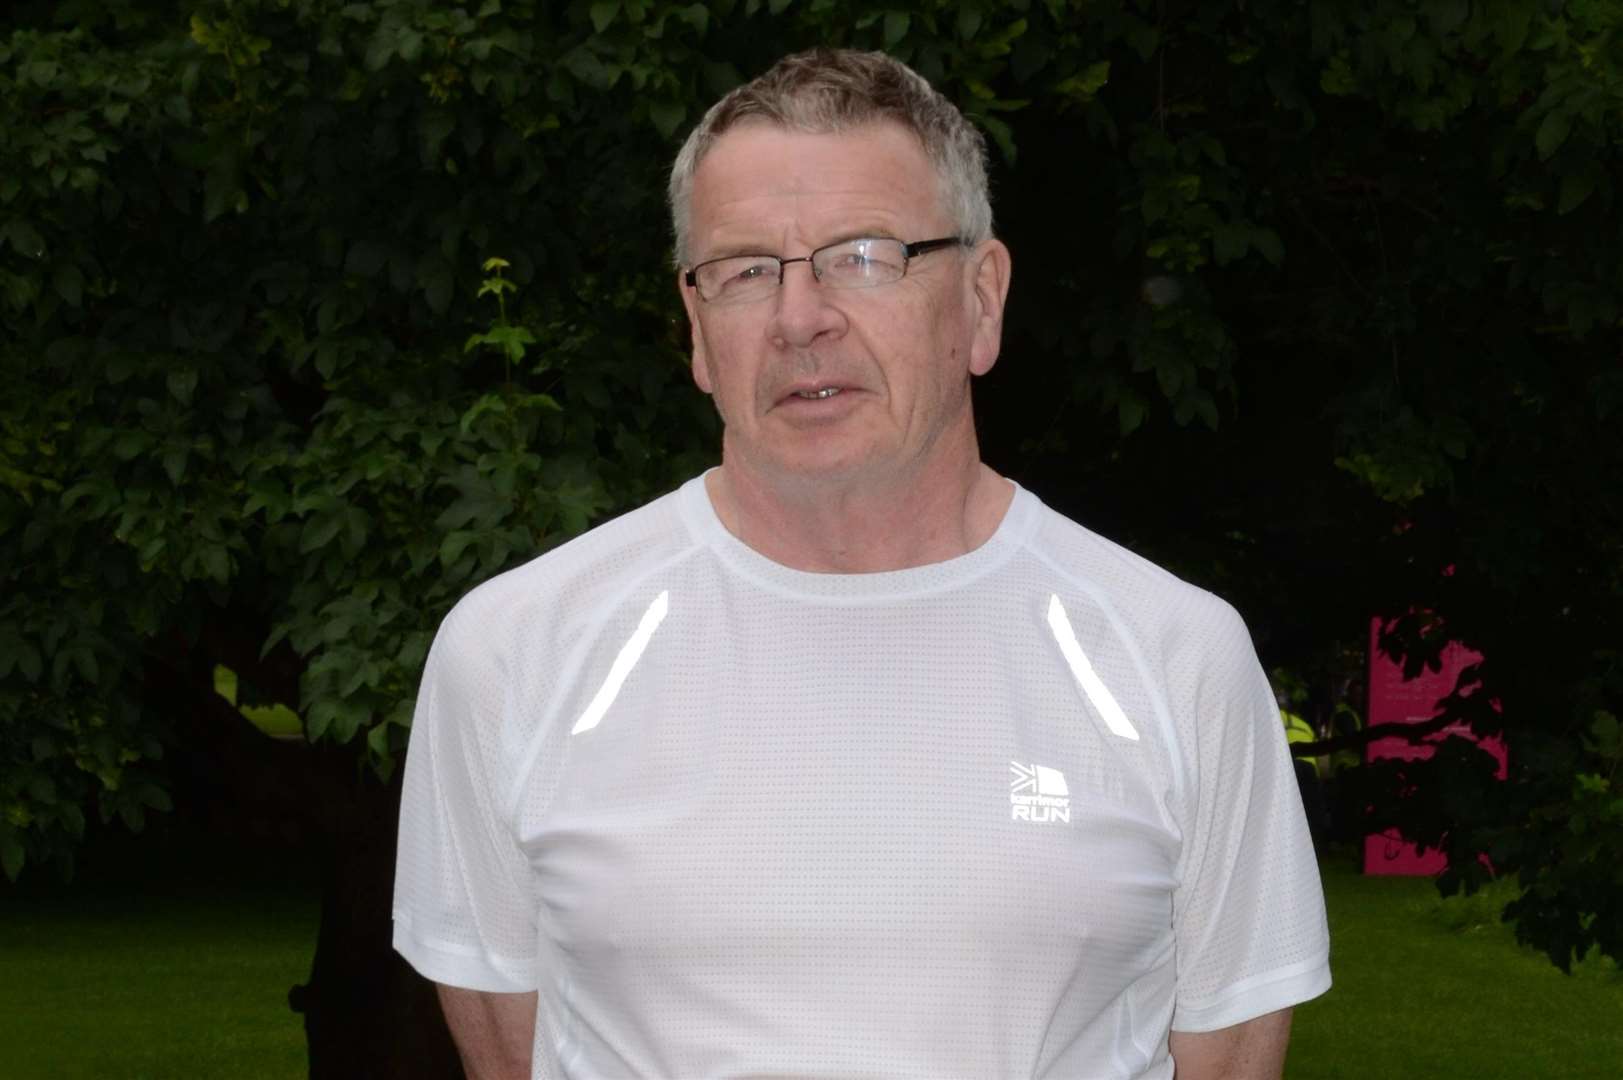 Chris Ryan will be running the London Marathon in memory of his son Danny